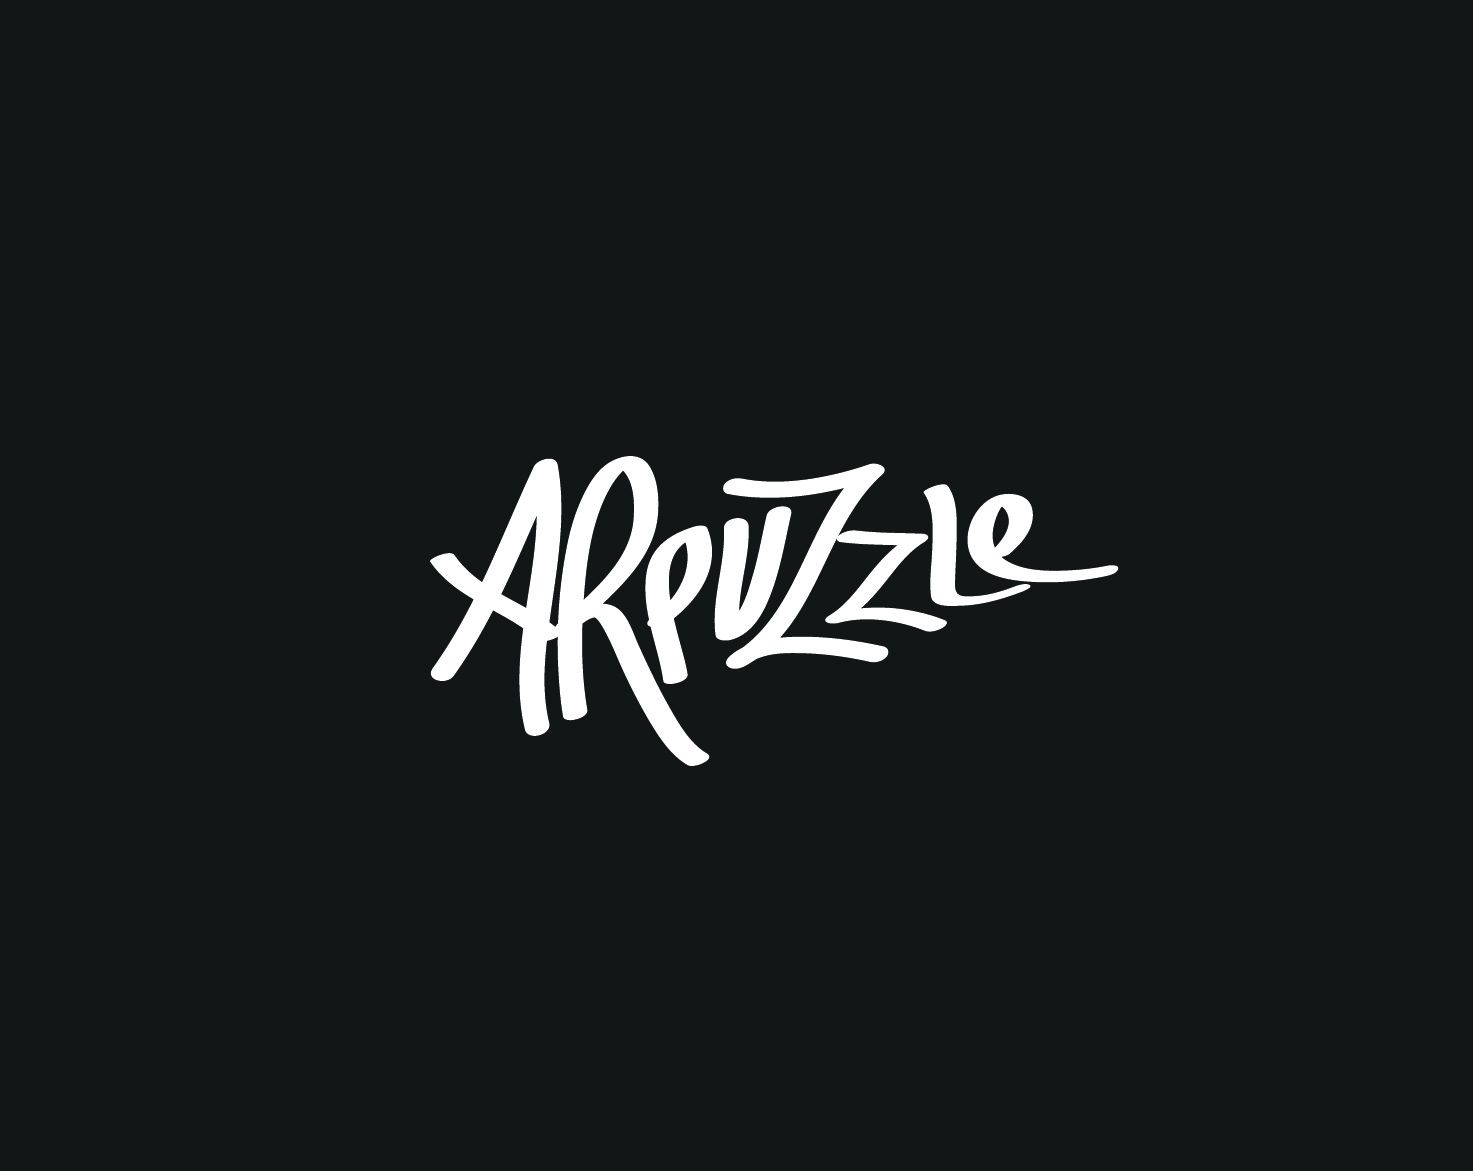 Логотип для ARpuzzle - дизайнер OzzzzyK